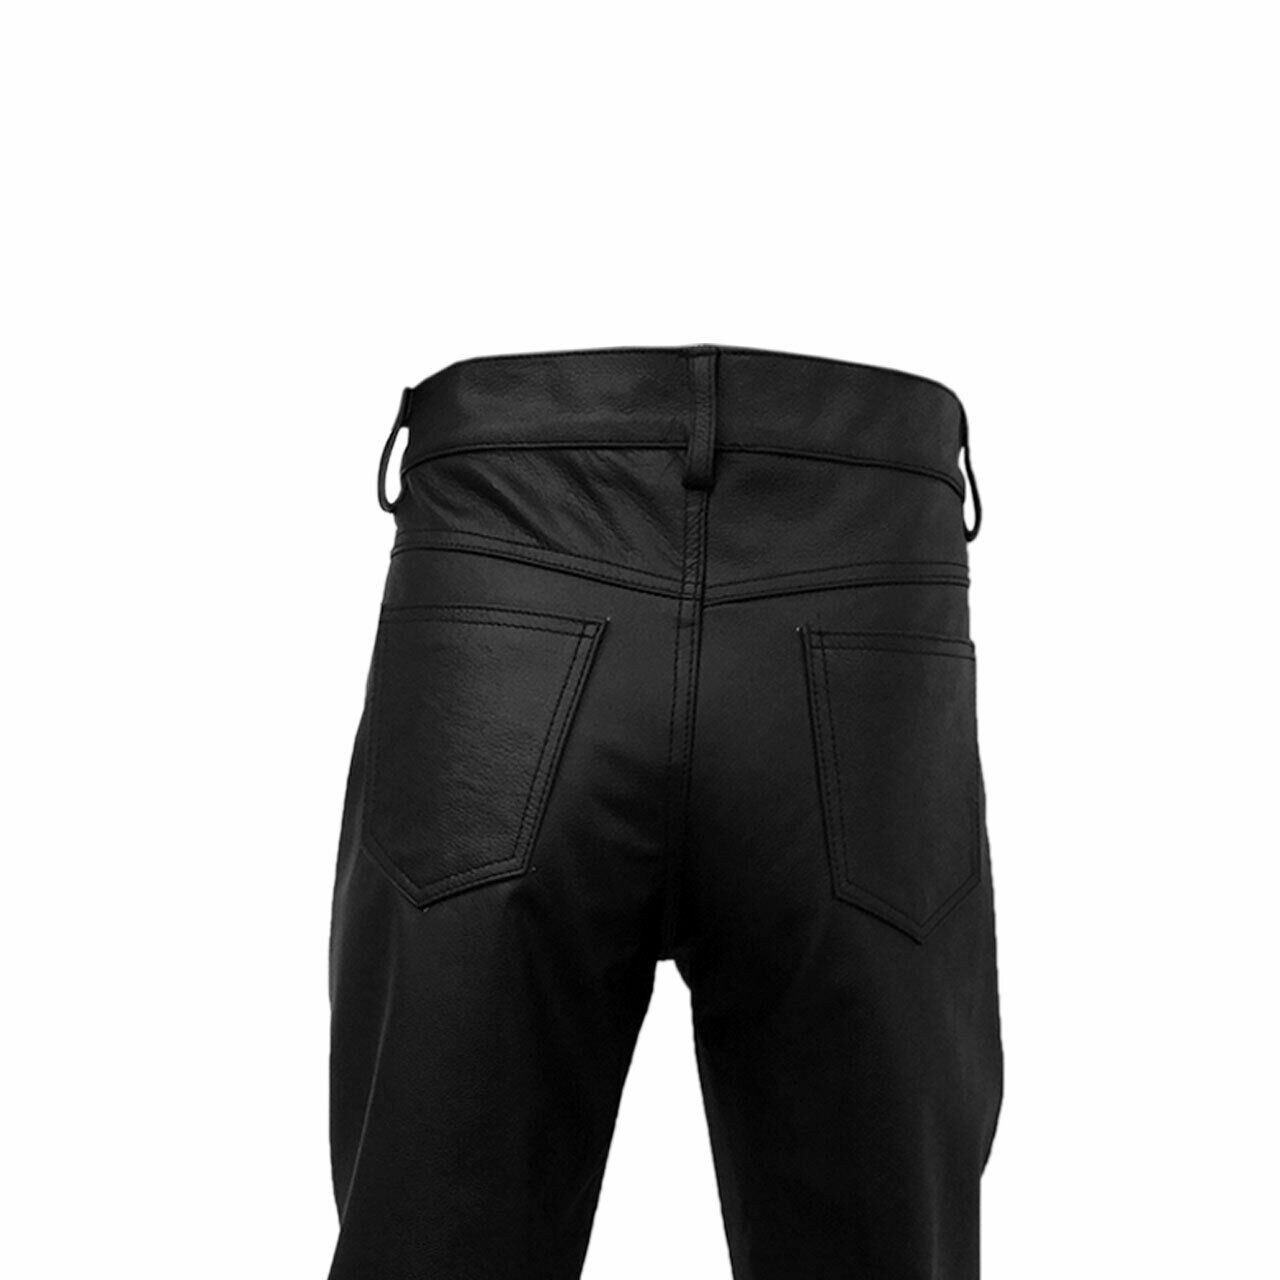 Mens Black Leather Biker Jeans One Panel Police Style - J2 Pants